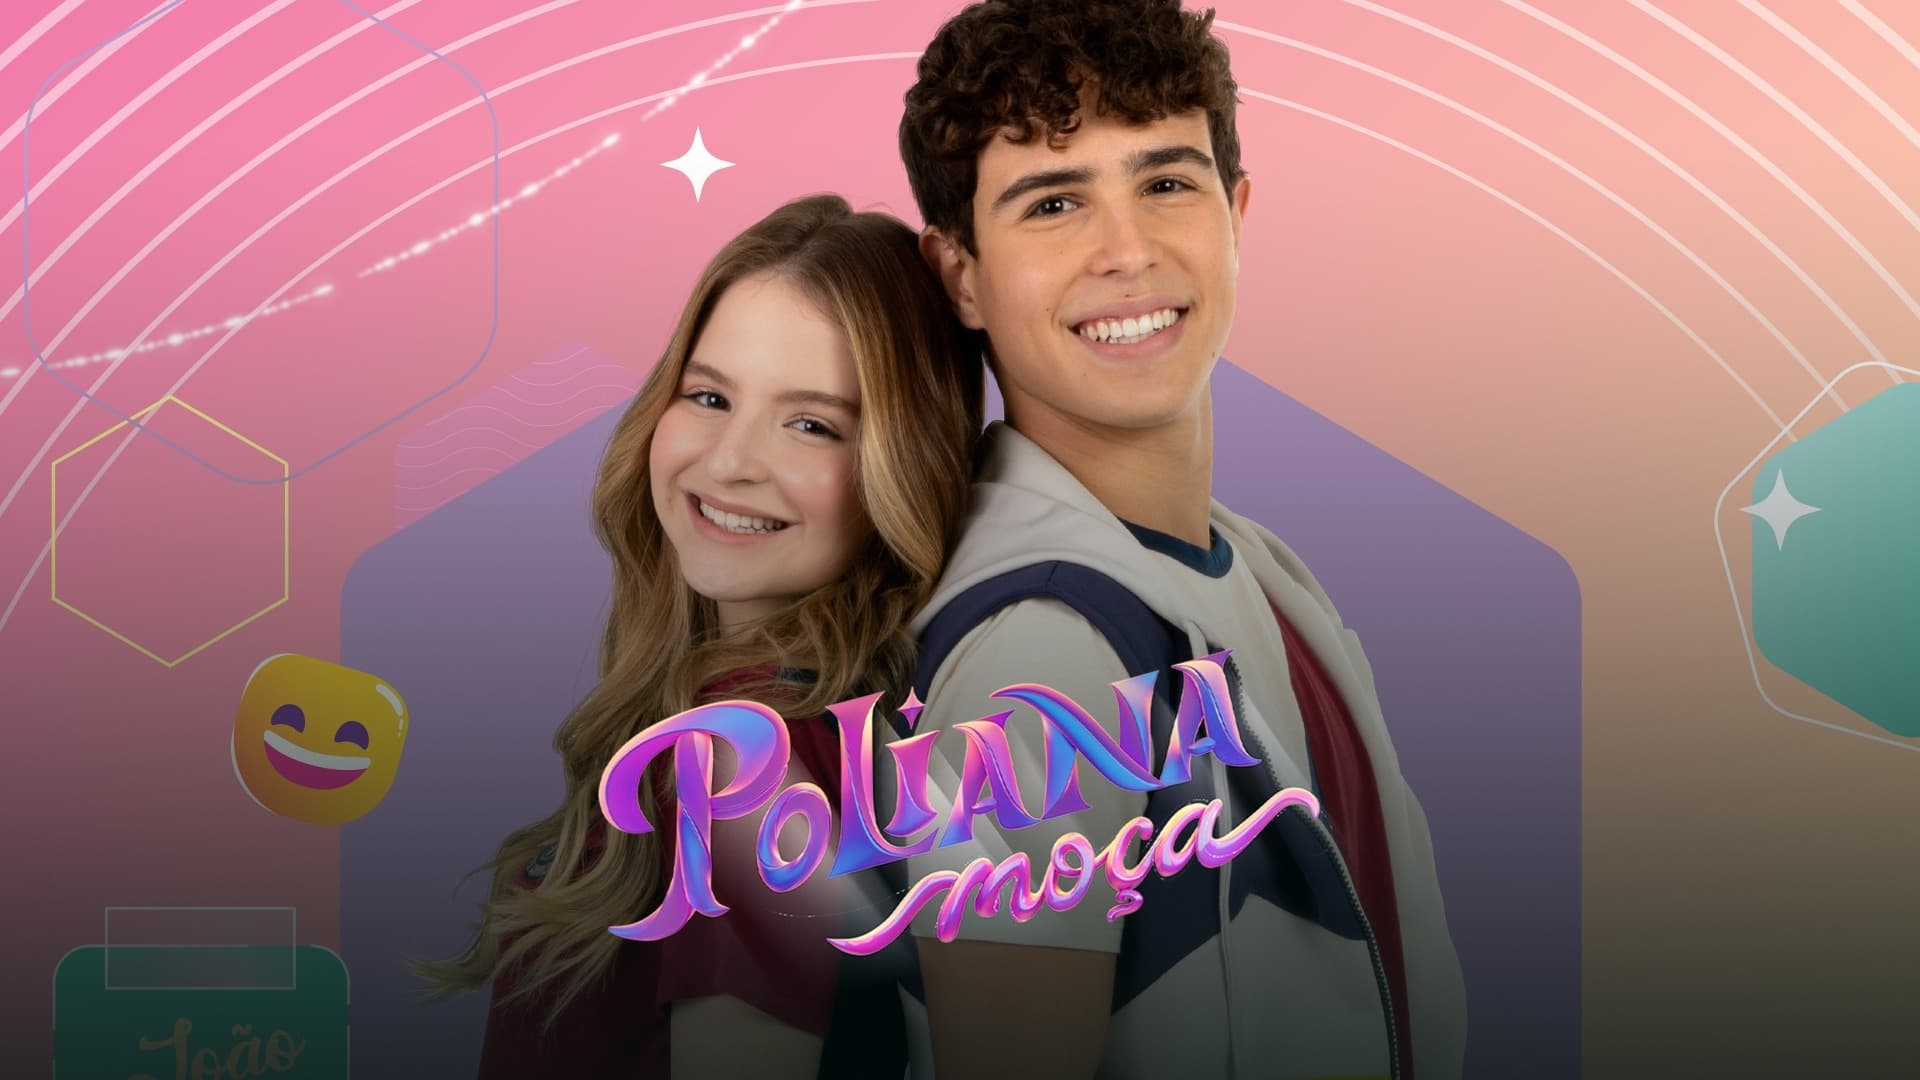 Poliana Moça - Season 1 Episode 115 : Episode 115